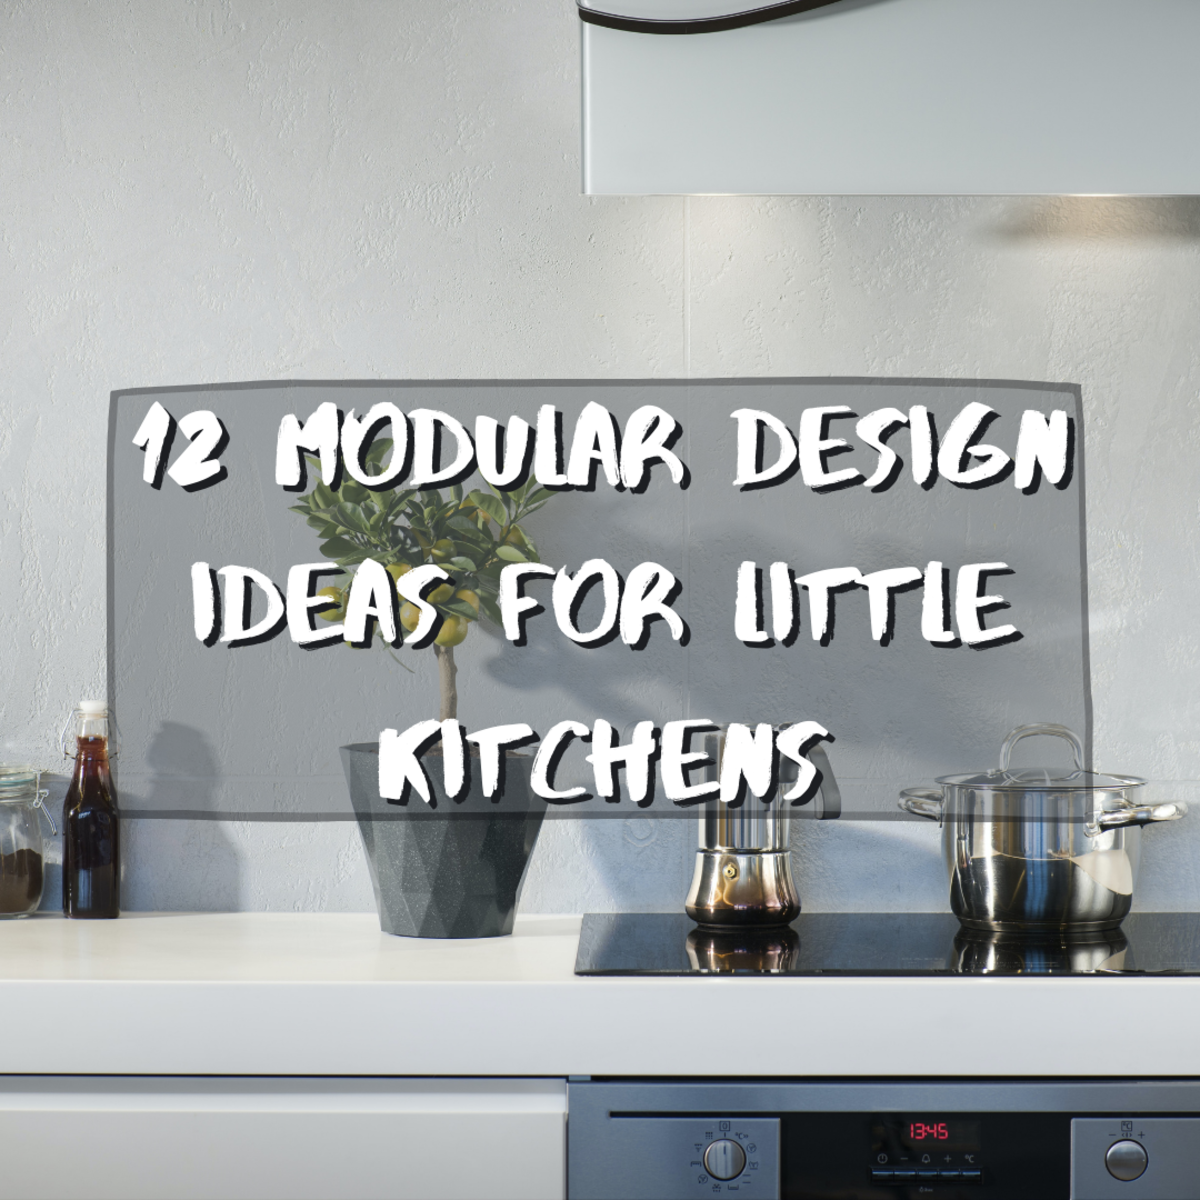 12 Trendy Modular Design Ideas for Small Kitchens